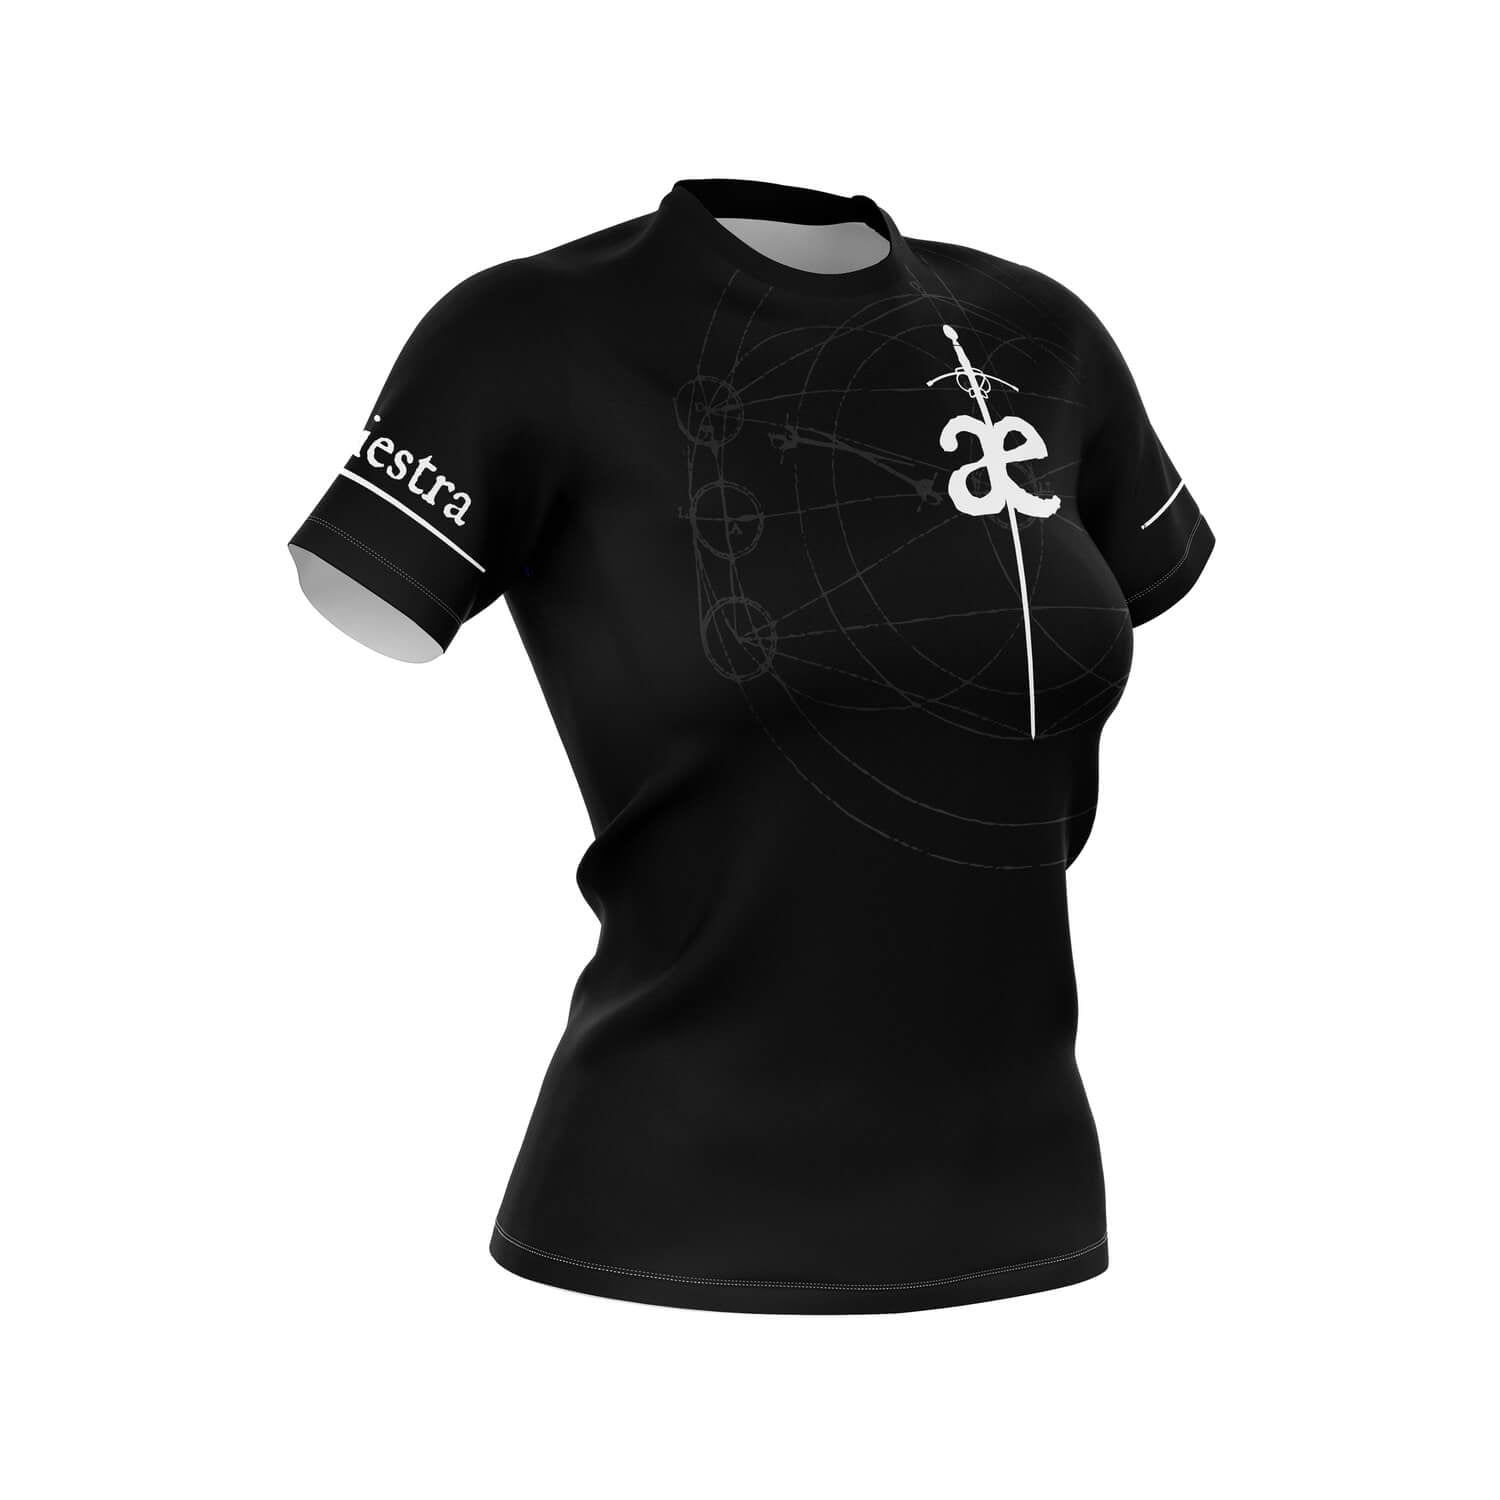 Academica Da Espada - Technical T-Shirt Woman